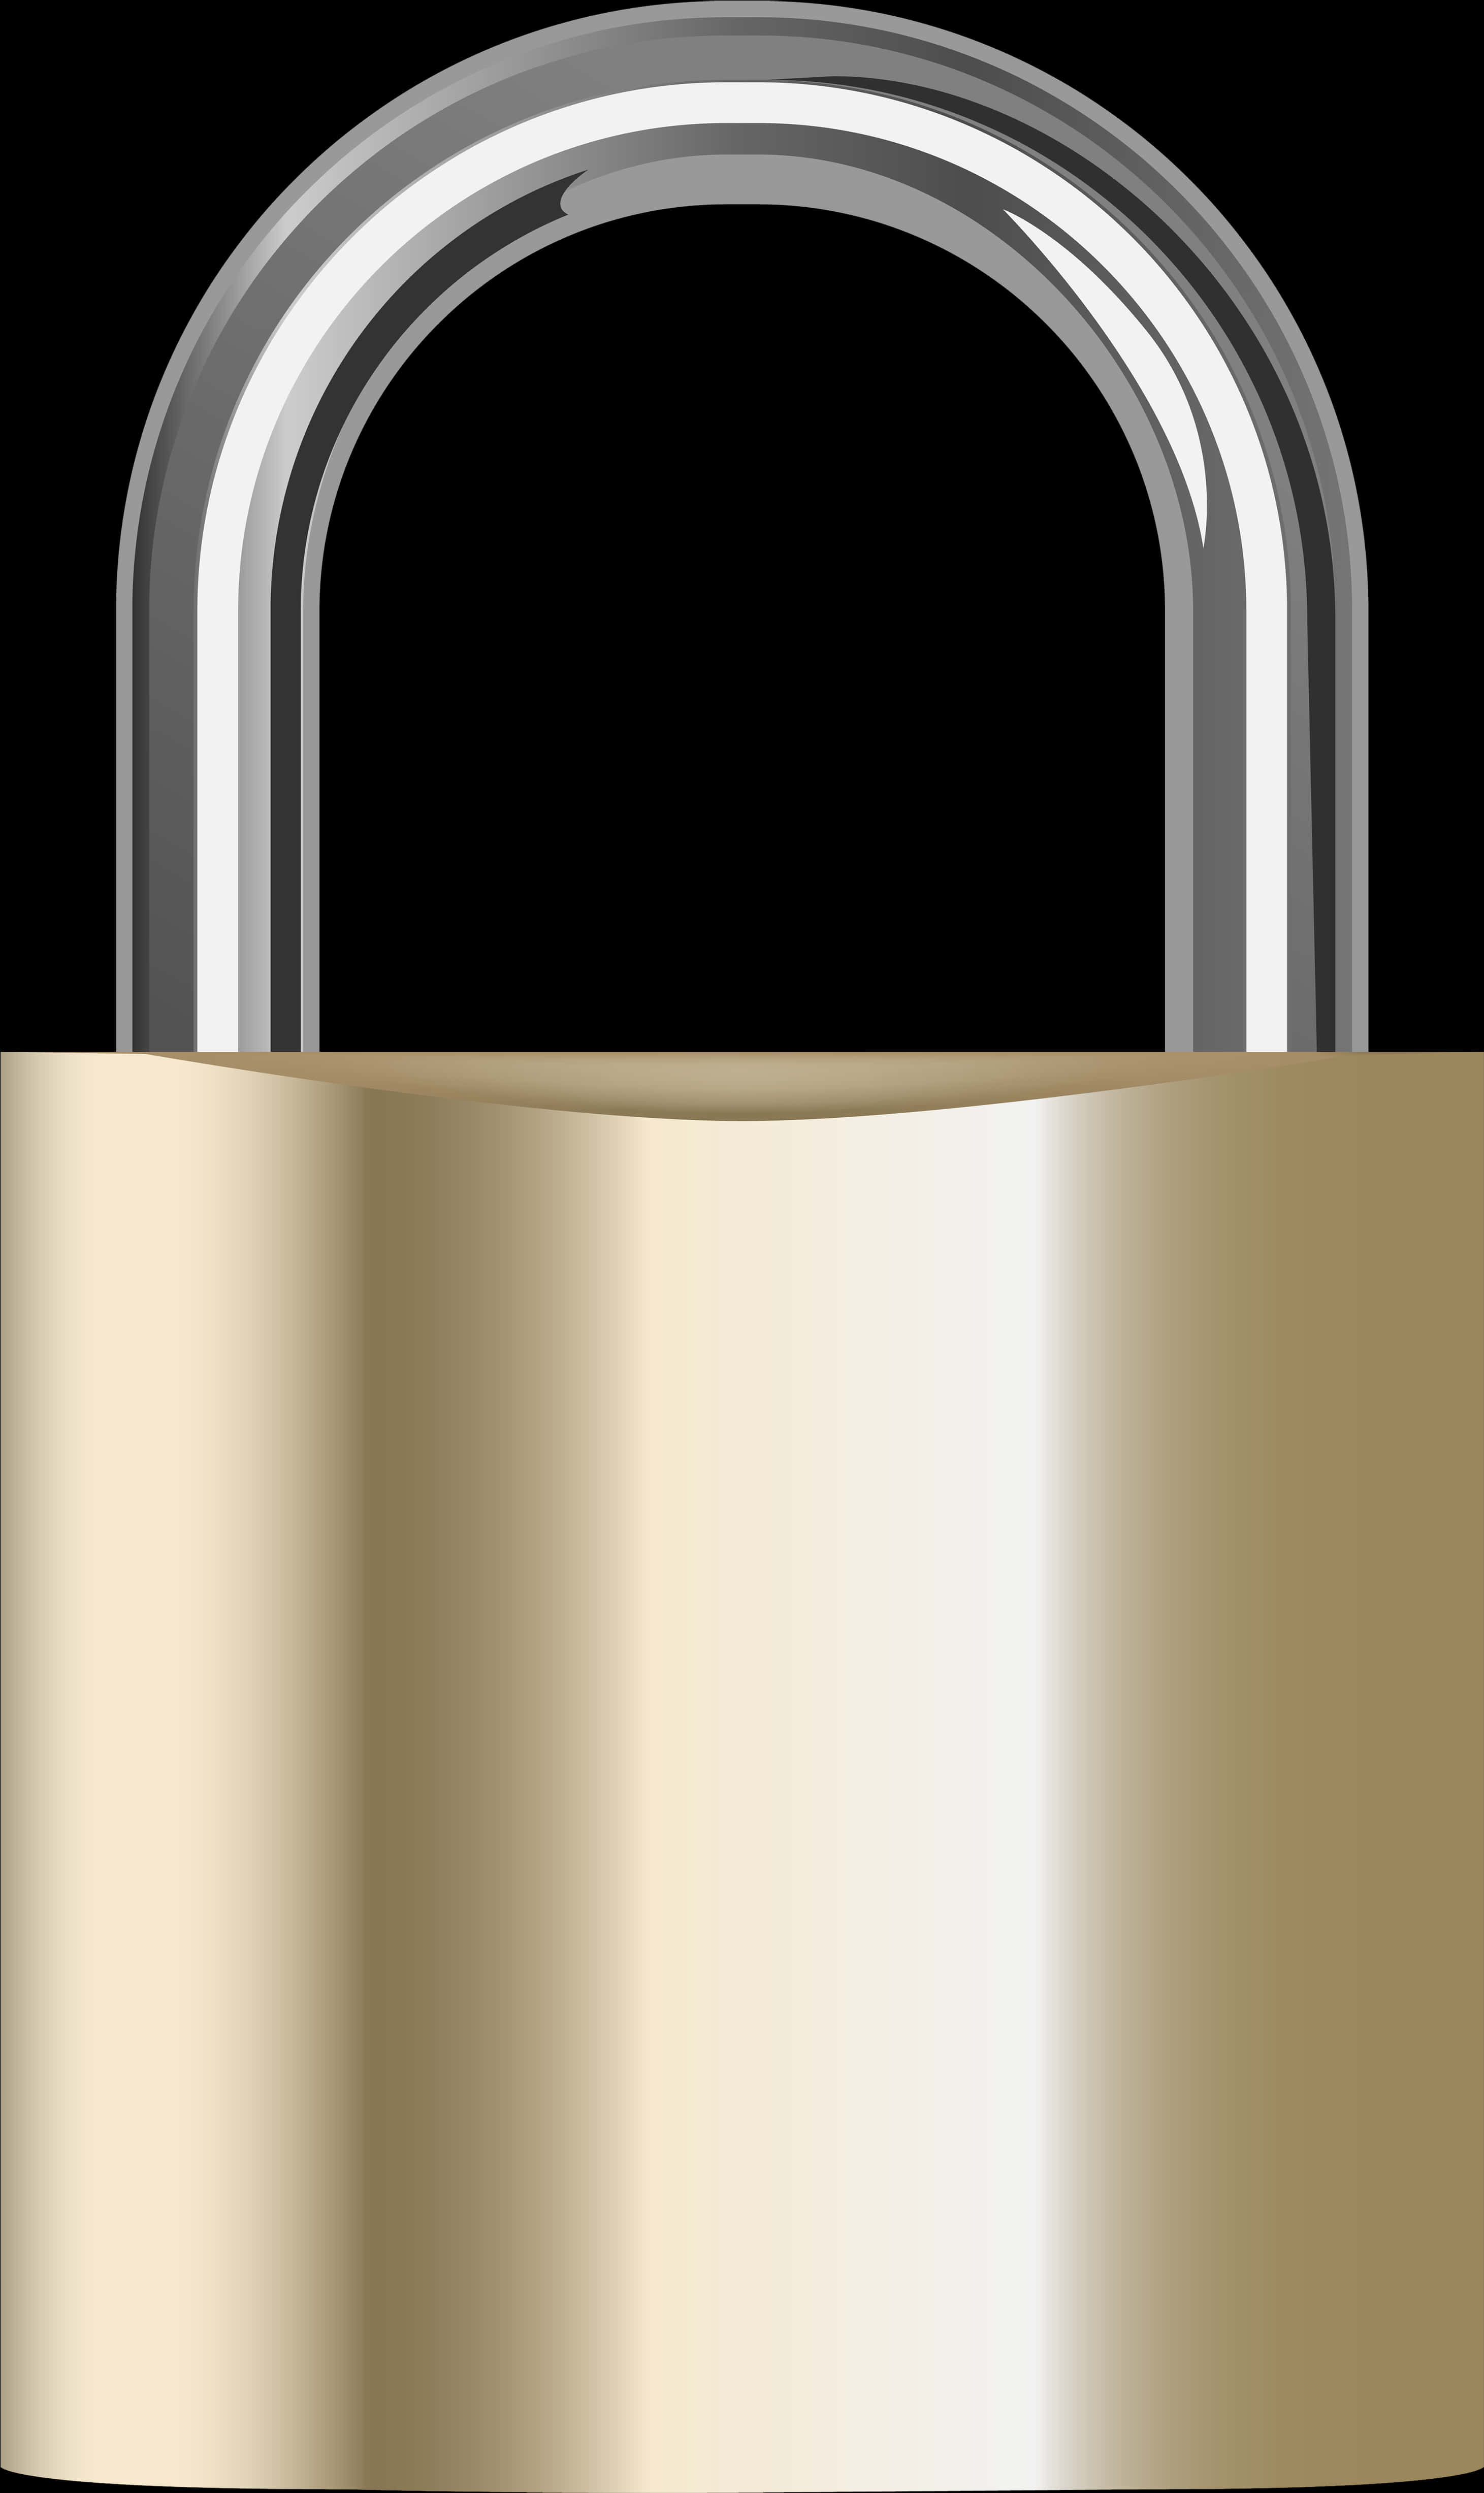 A Close-up Of A Lock